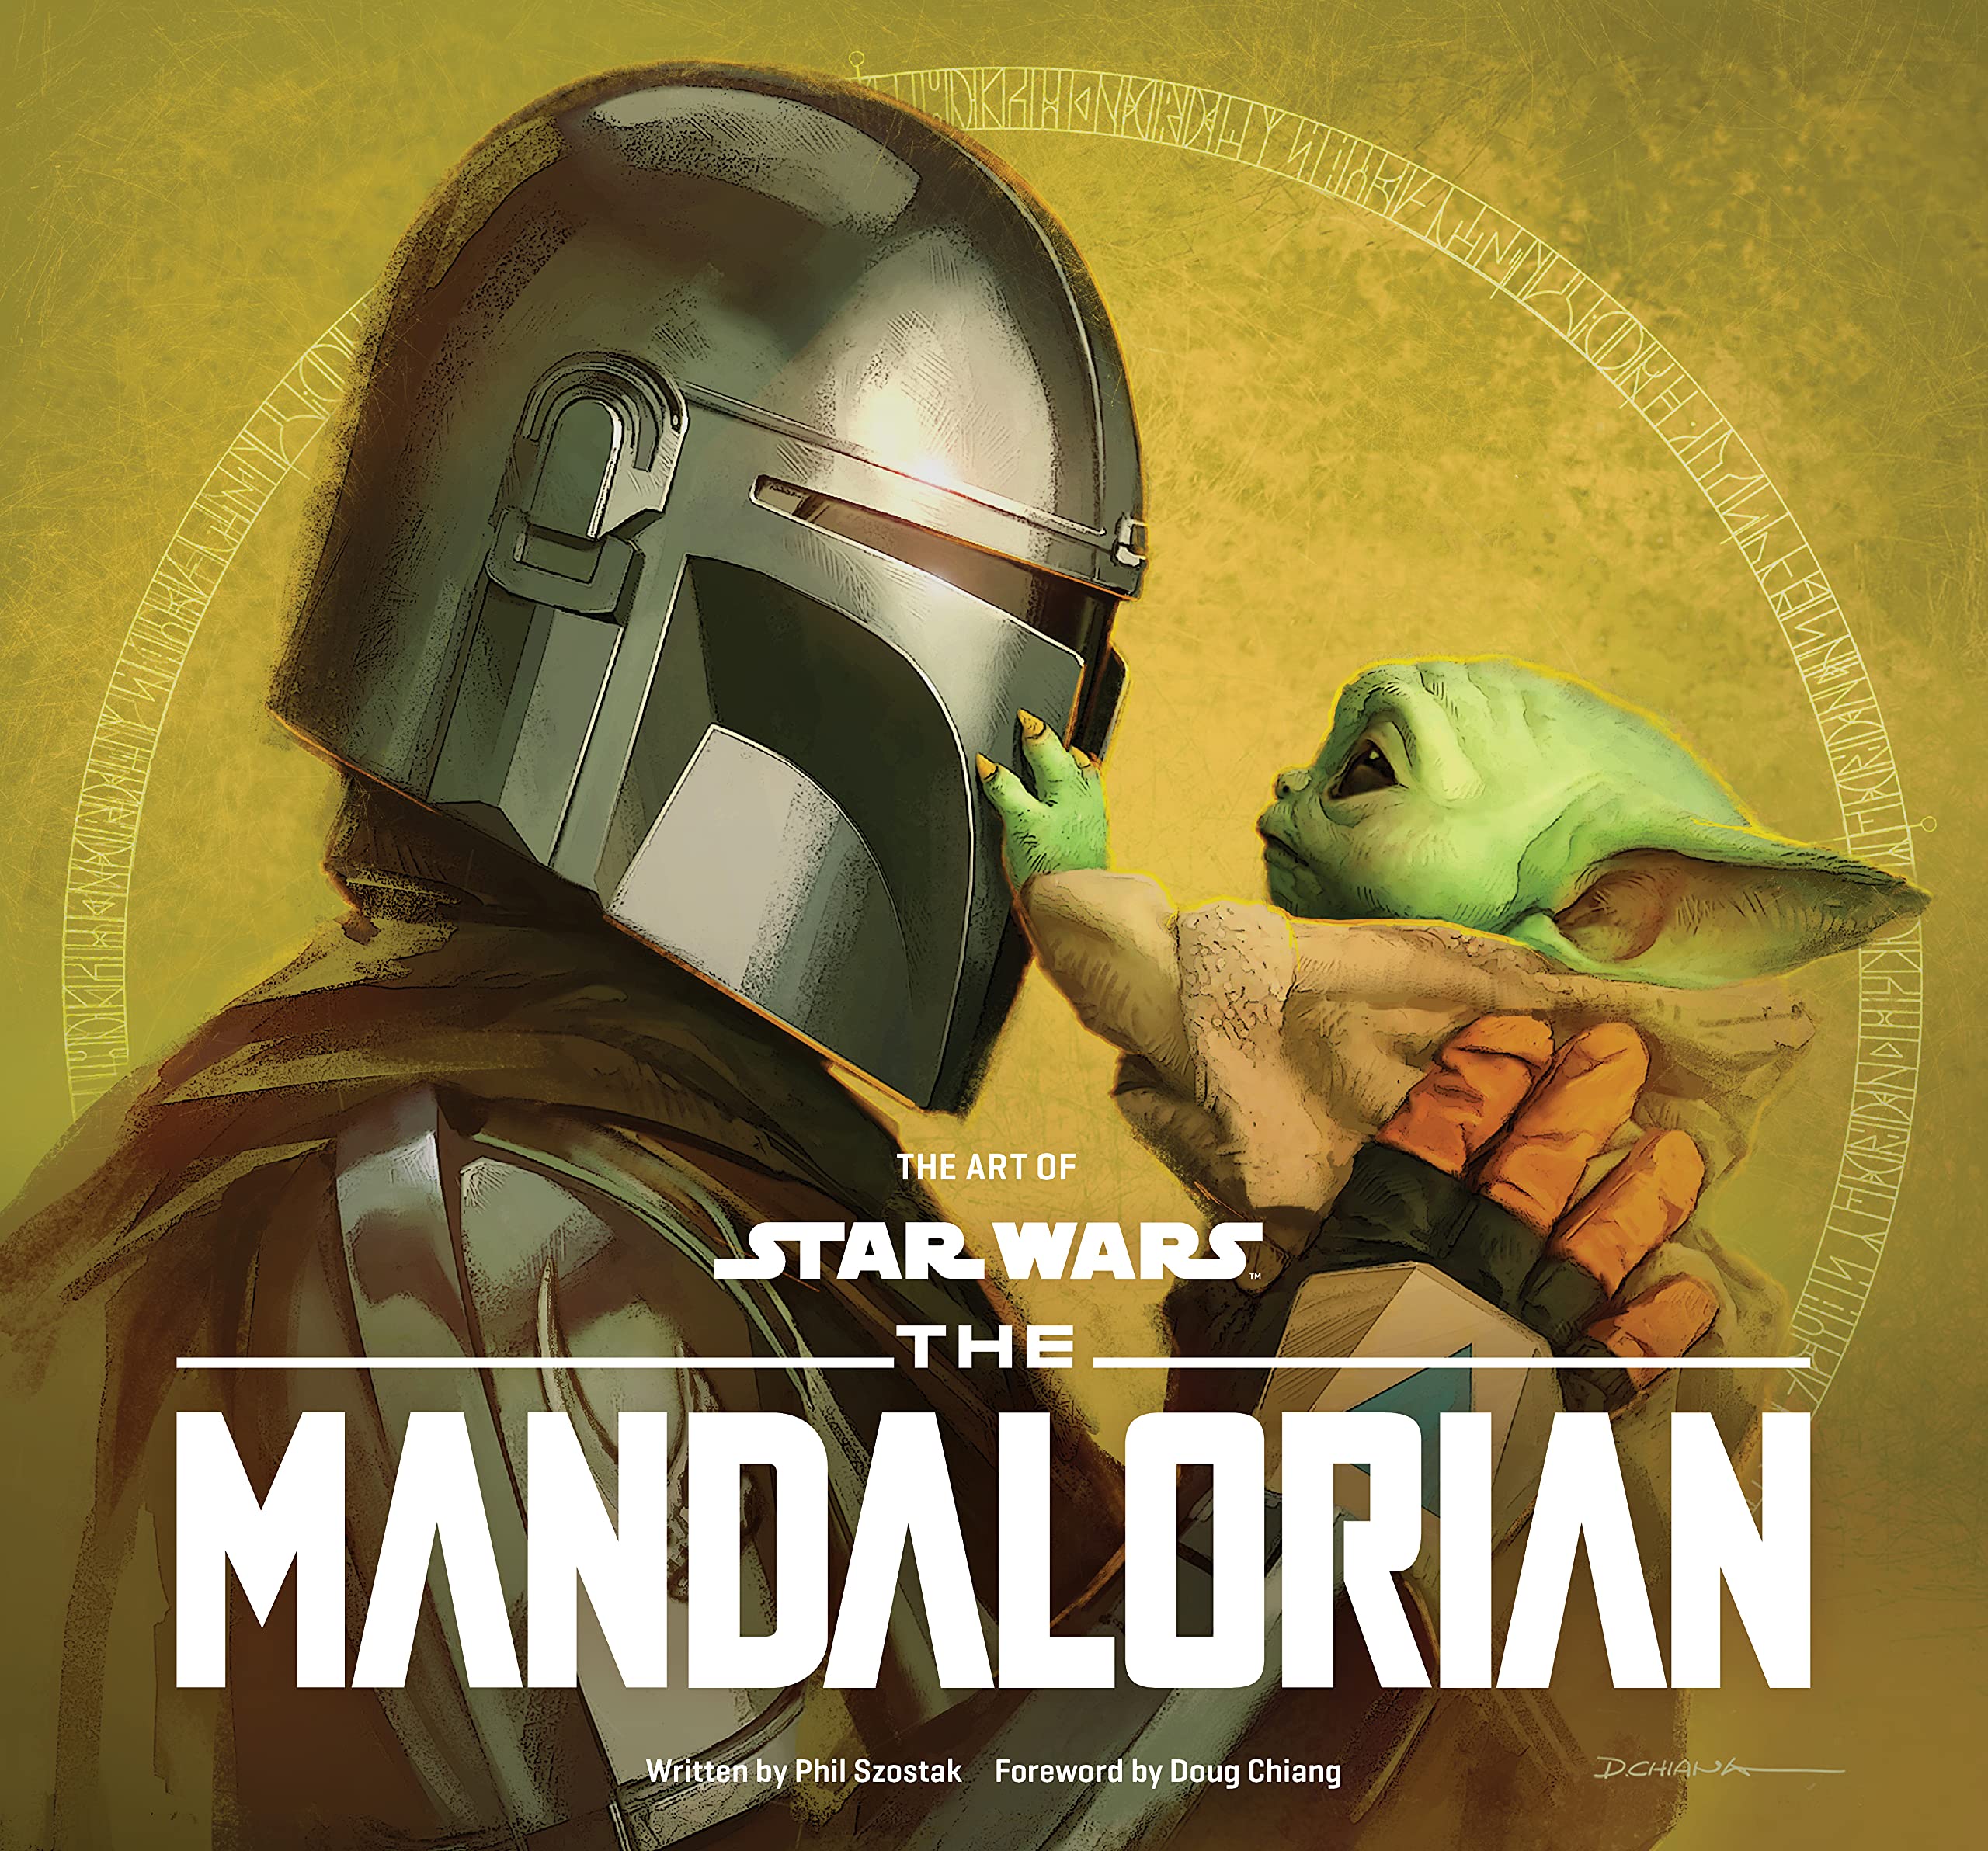 Wars:　Mandalorian　Mandalorian　The　The　(Season　Lucasfilm,　Phil　Two)　Mandalorian　by　Wars,　Szostak　Star　Star　Books　The　of　Art　The